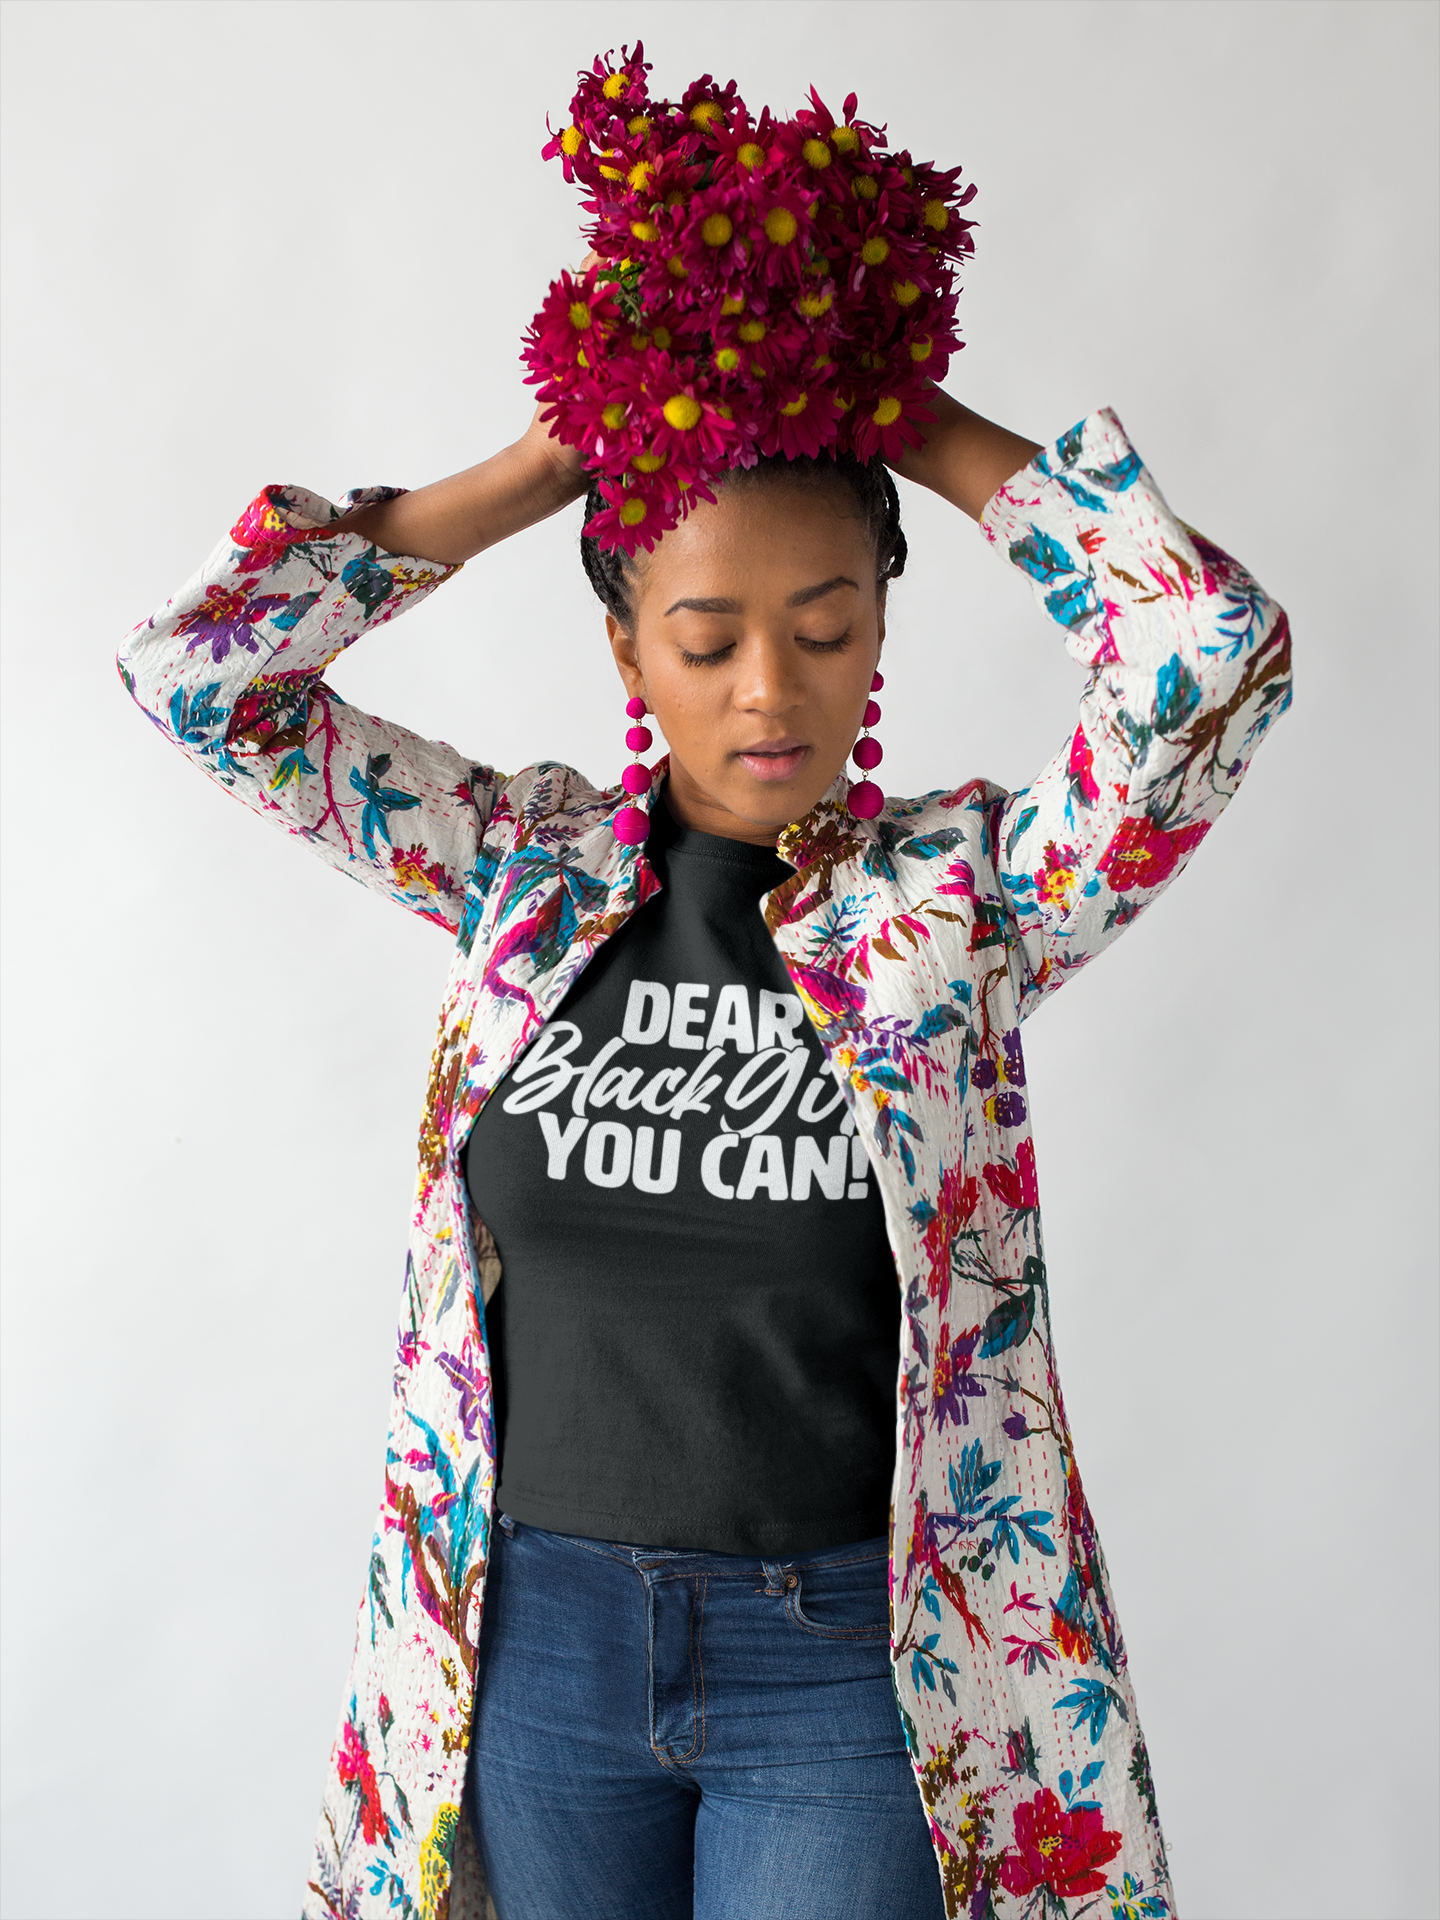 Dear Black Girl, You can!